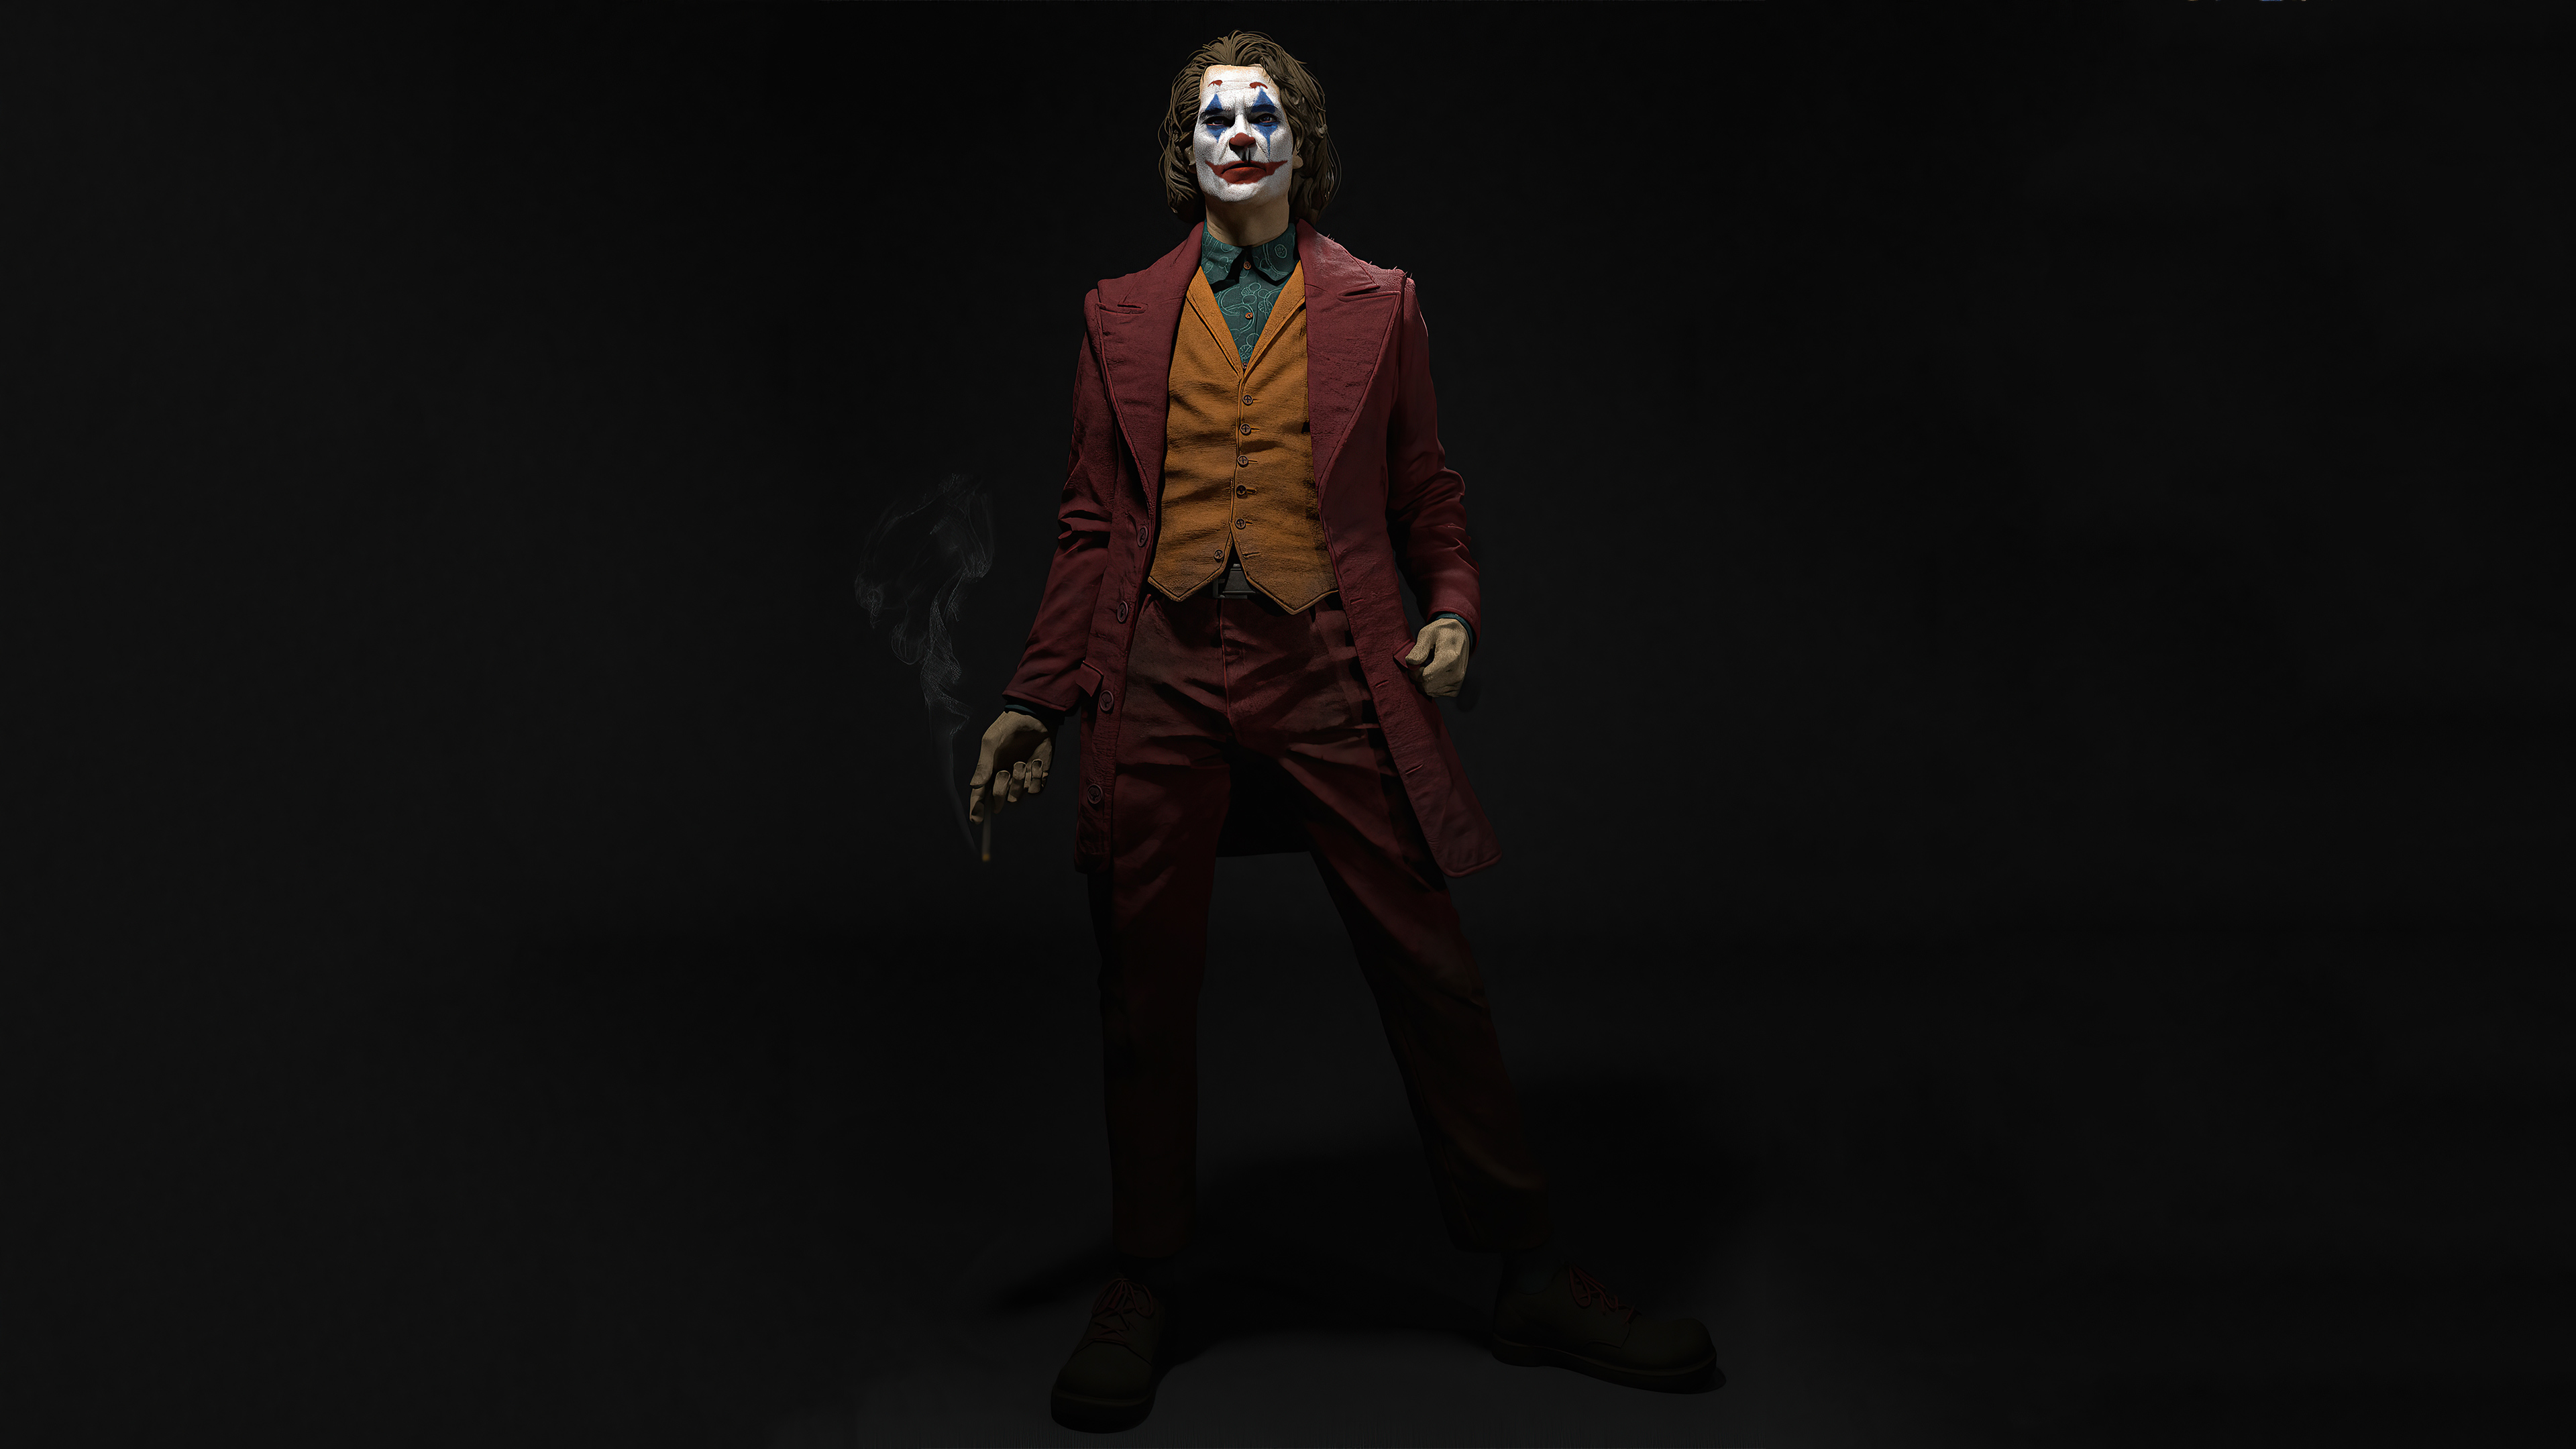 Joker Smoking 4K Portrait Wallpaper, HD Superheroes 4K Wallpapers, Images,  Photos and Background - Wallpapers Den